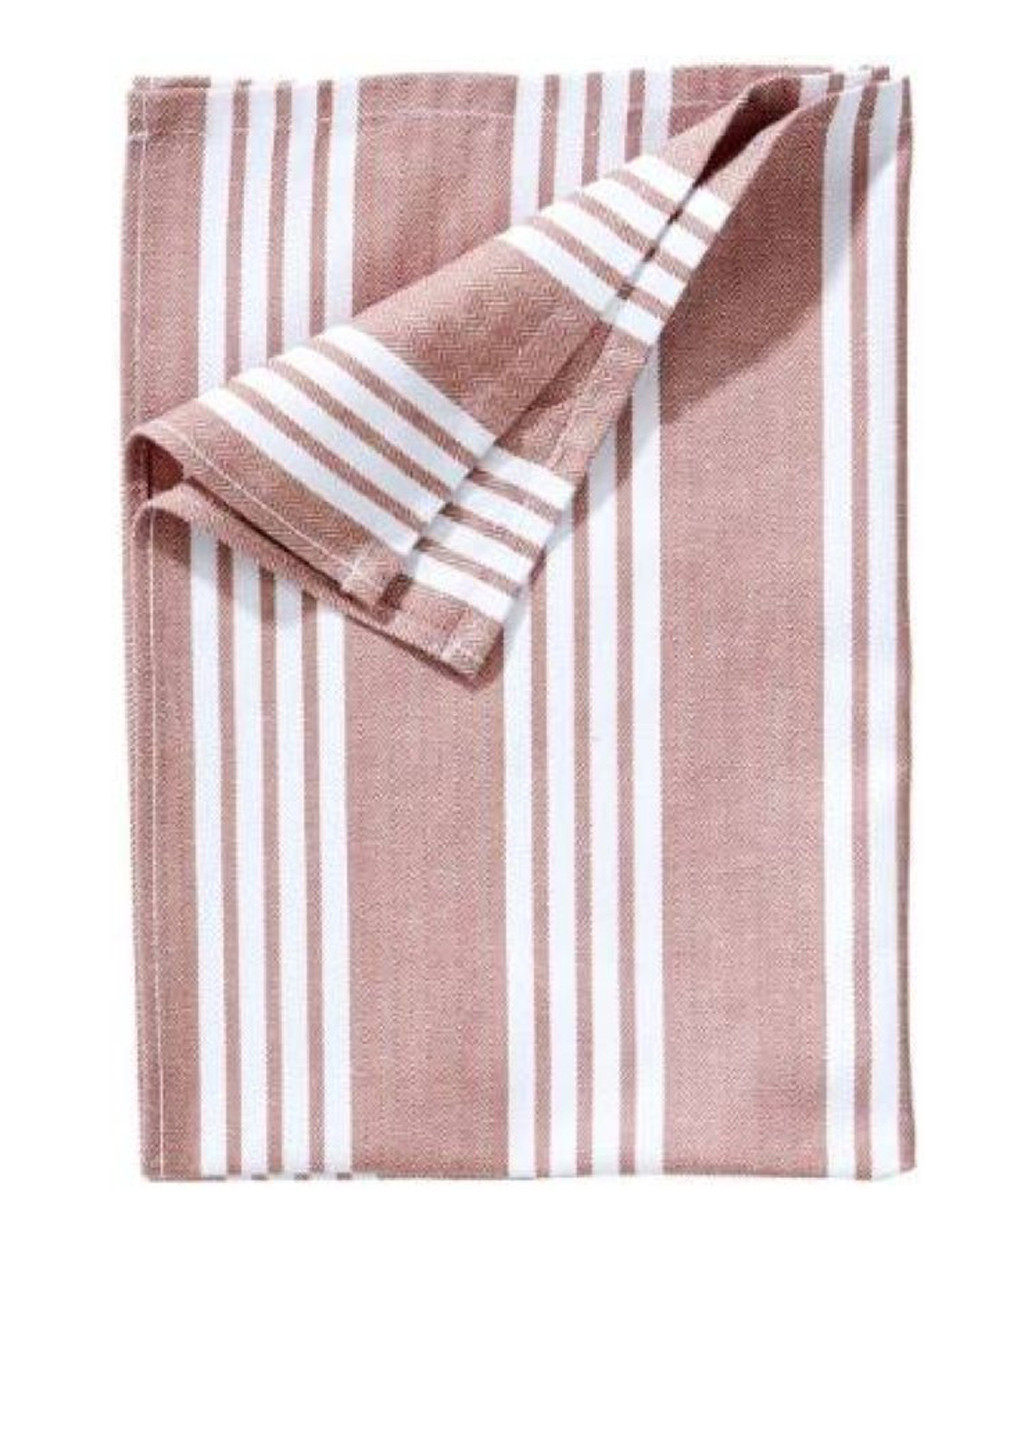 Butlers полотенце, 50x70 см полоска бежевый производство - Египет